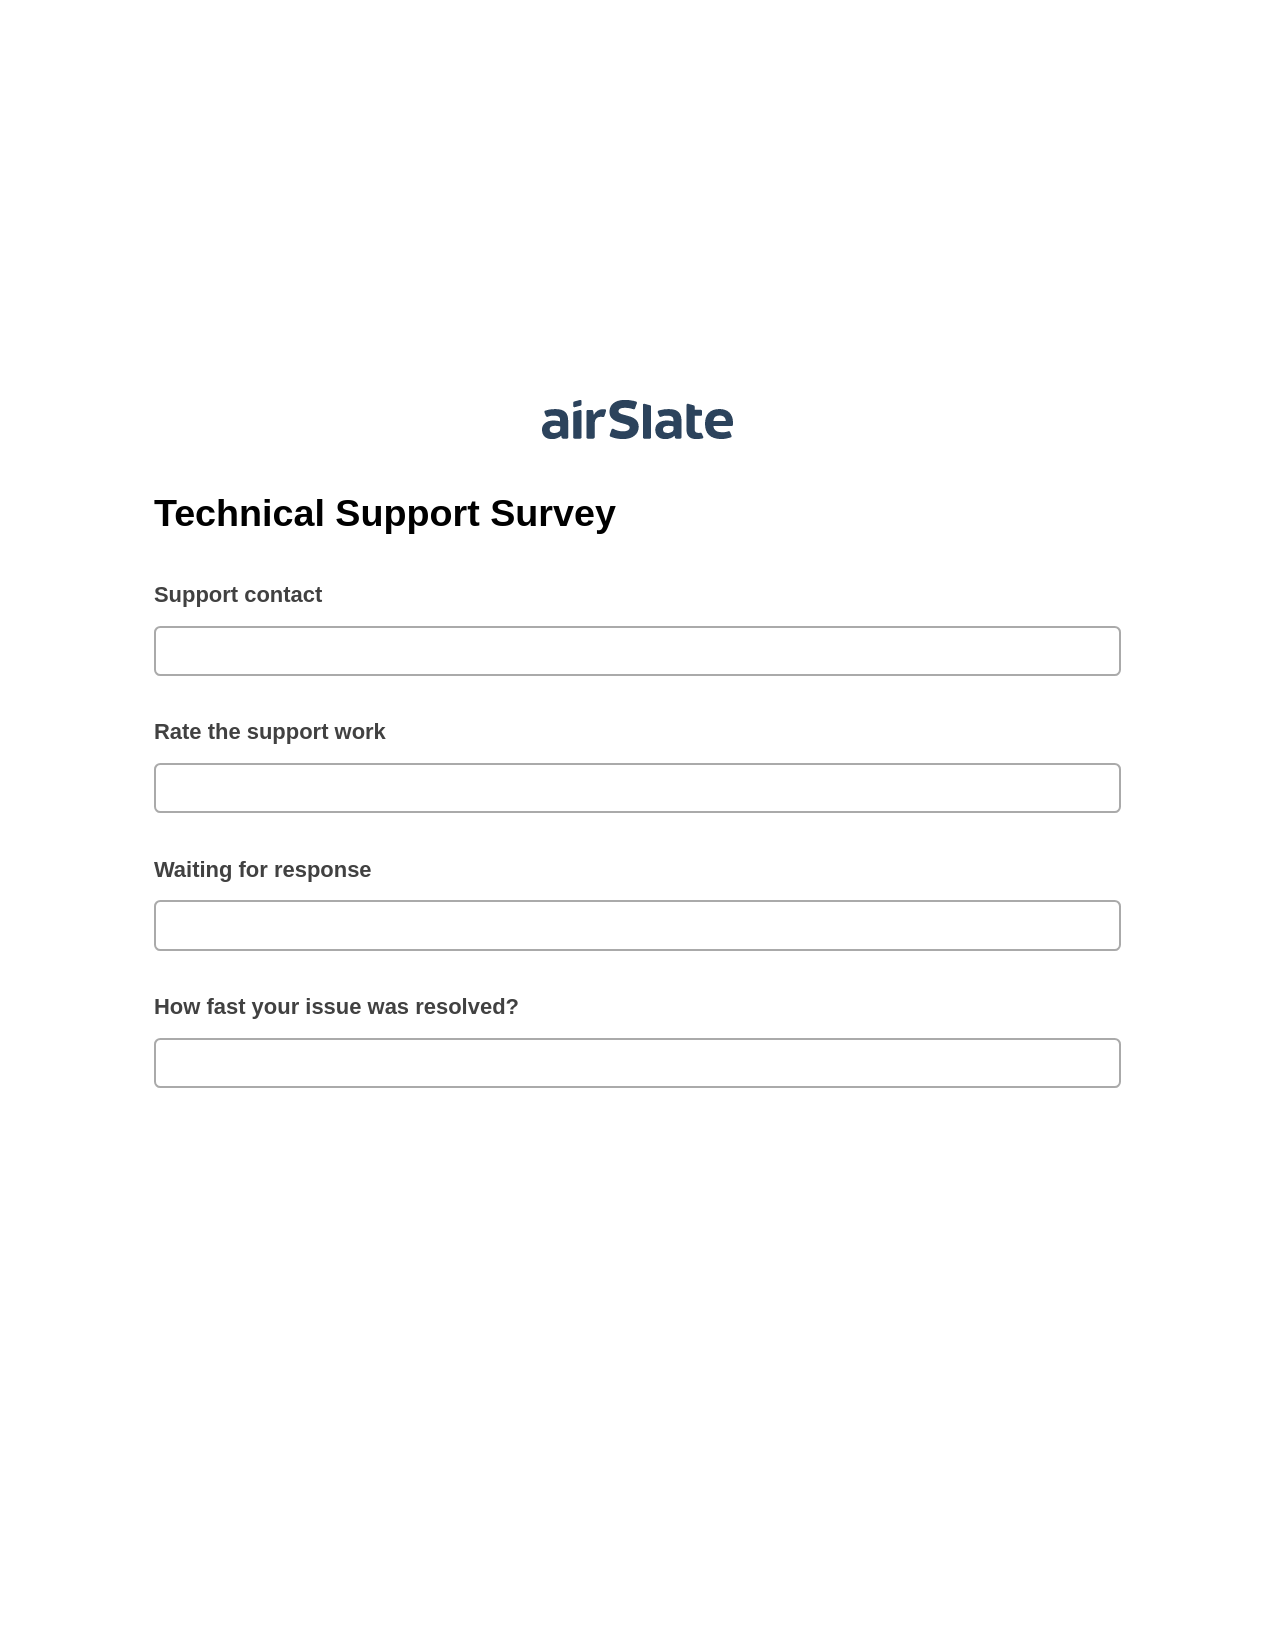 Technical Support Survey Pre-fill Document Bot, Create Slate every Google Sheet Update Bot, Post-finish Document Bot